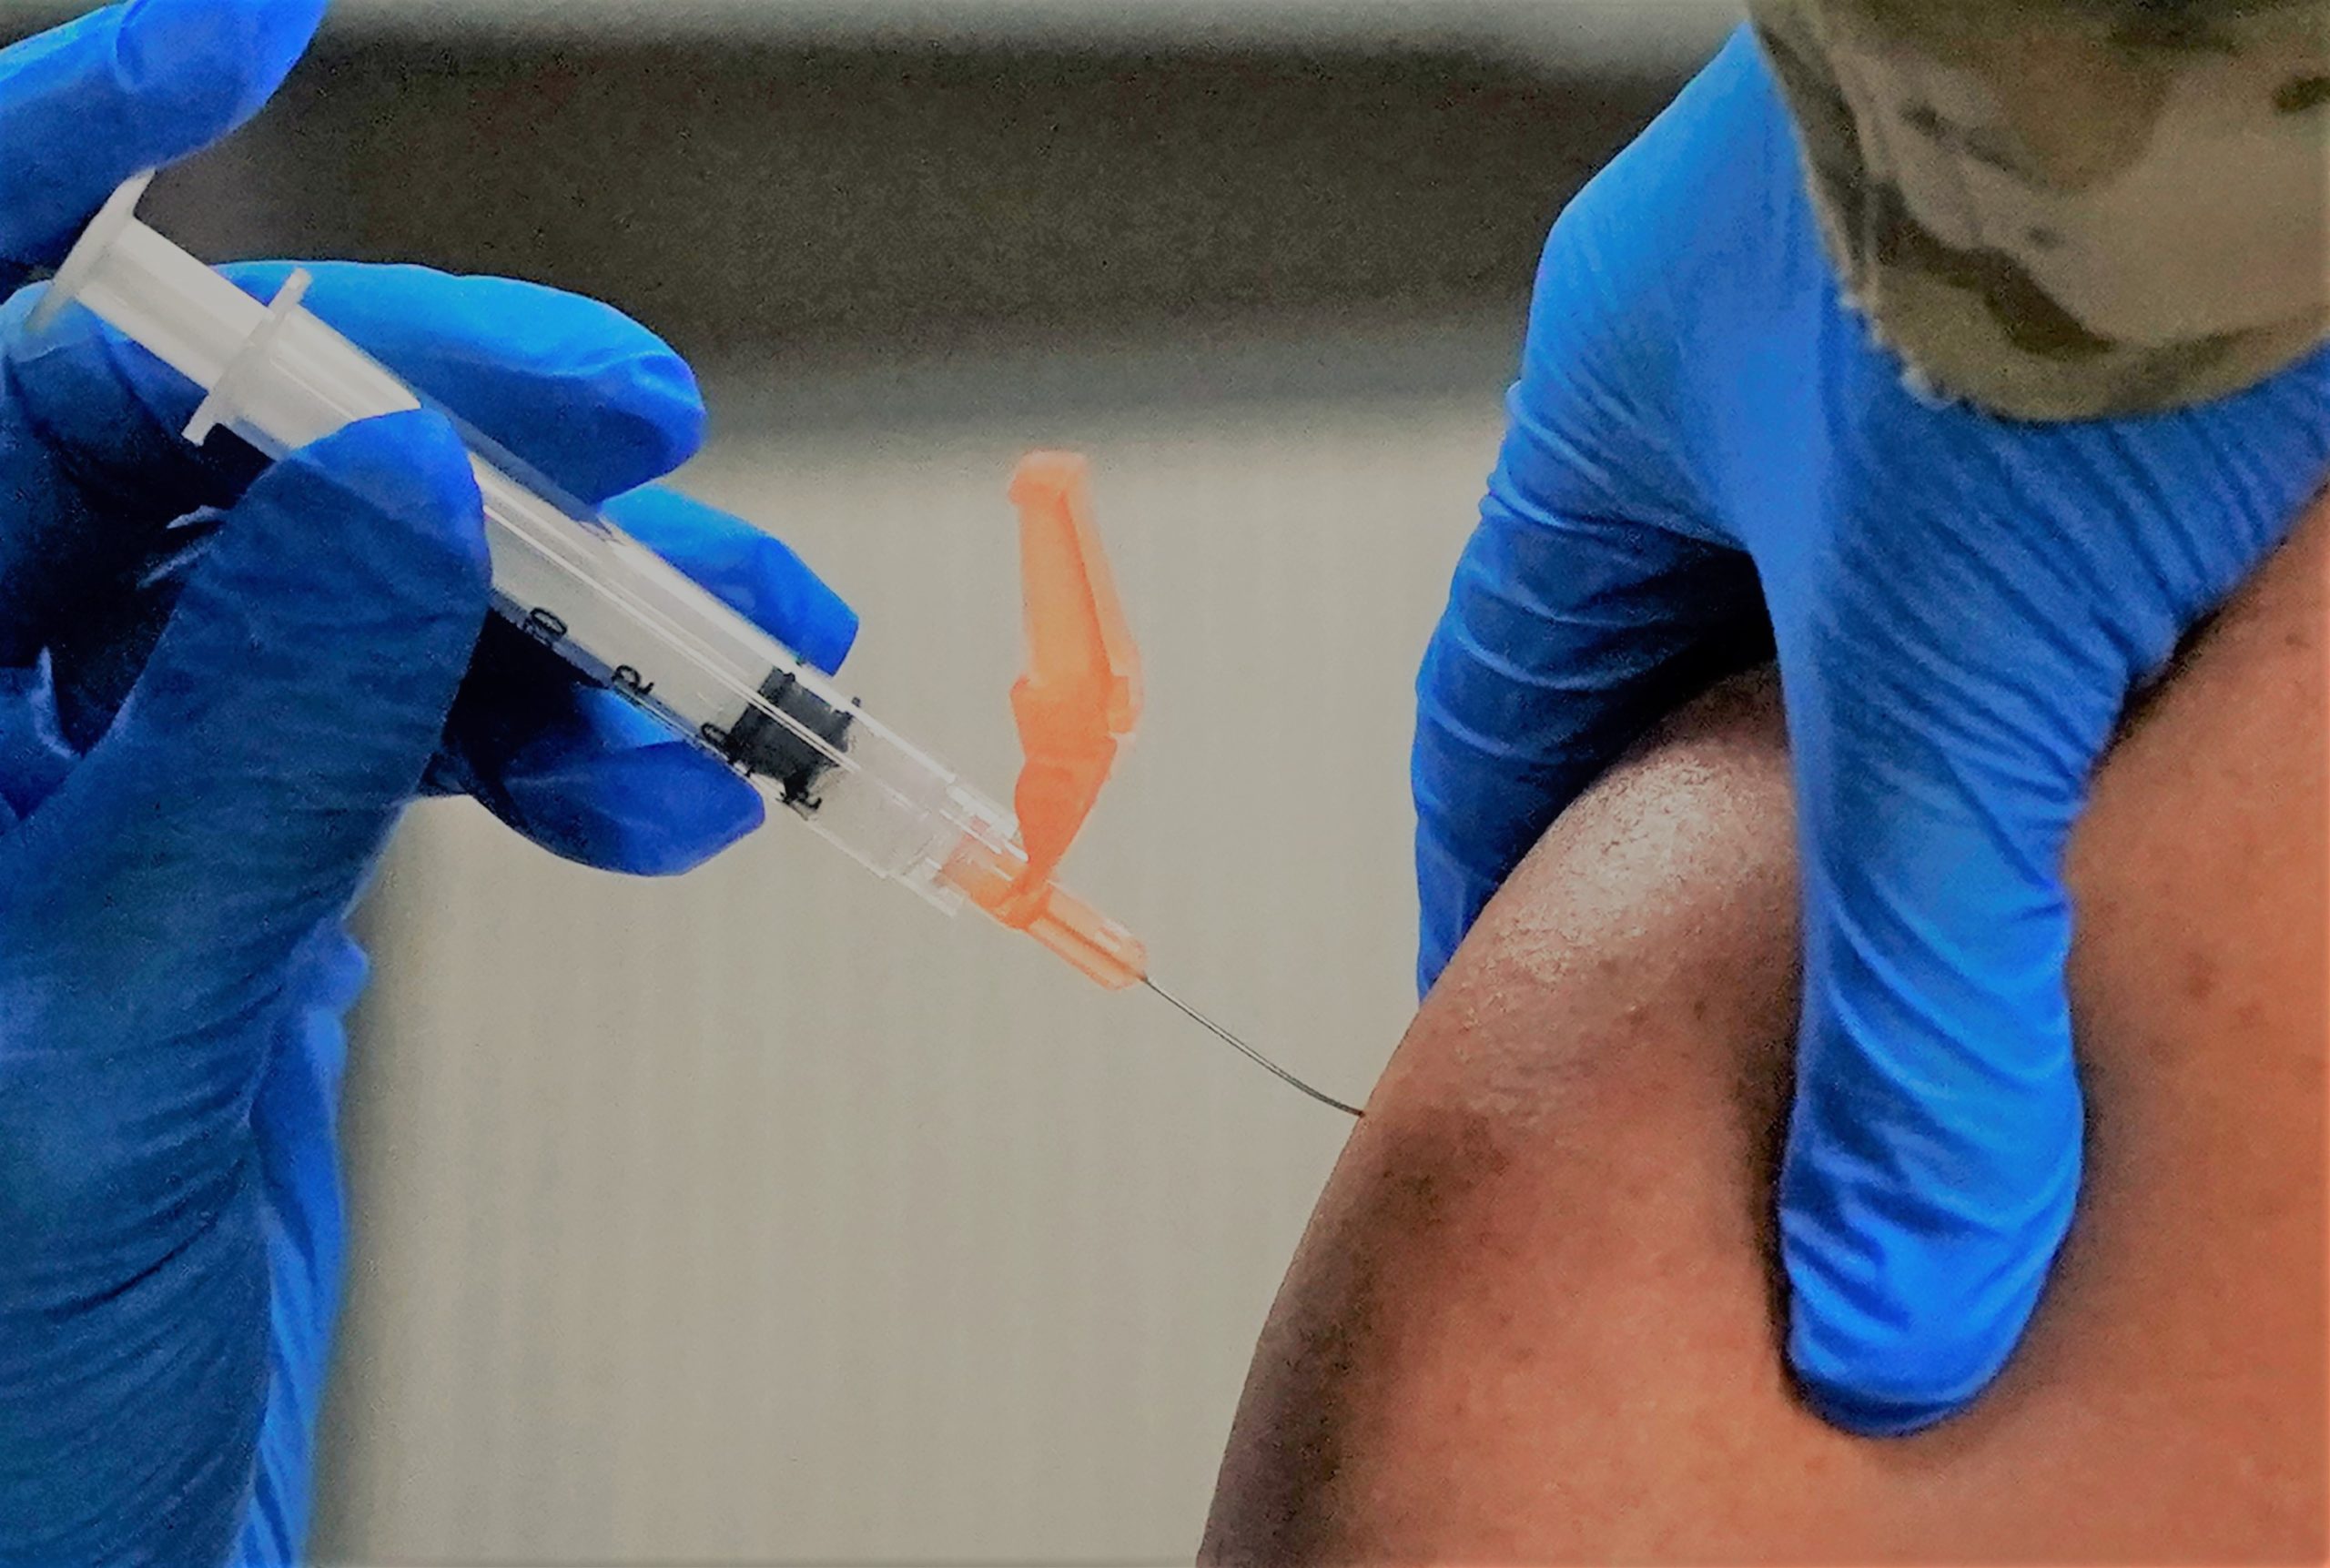 vaccine, Kevin Jackson